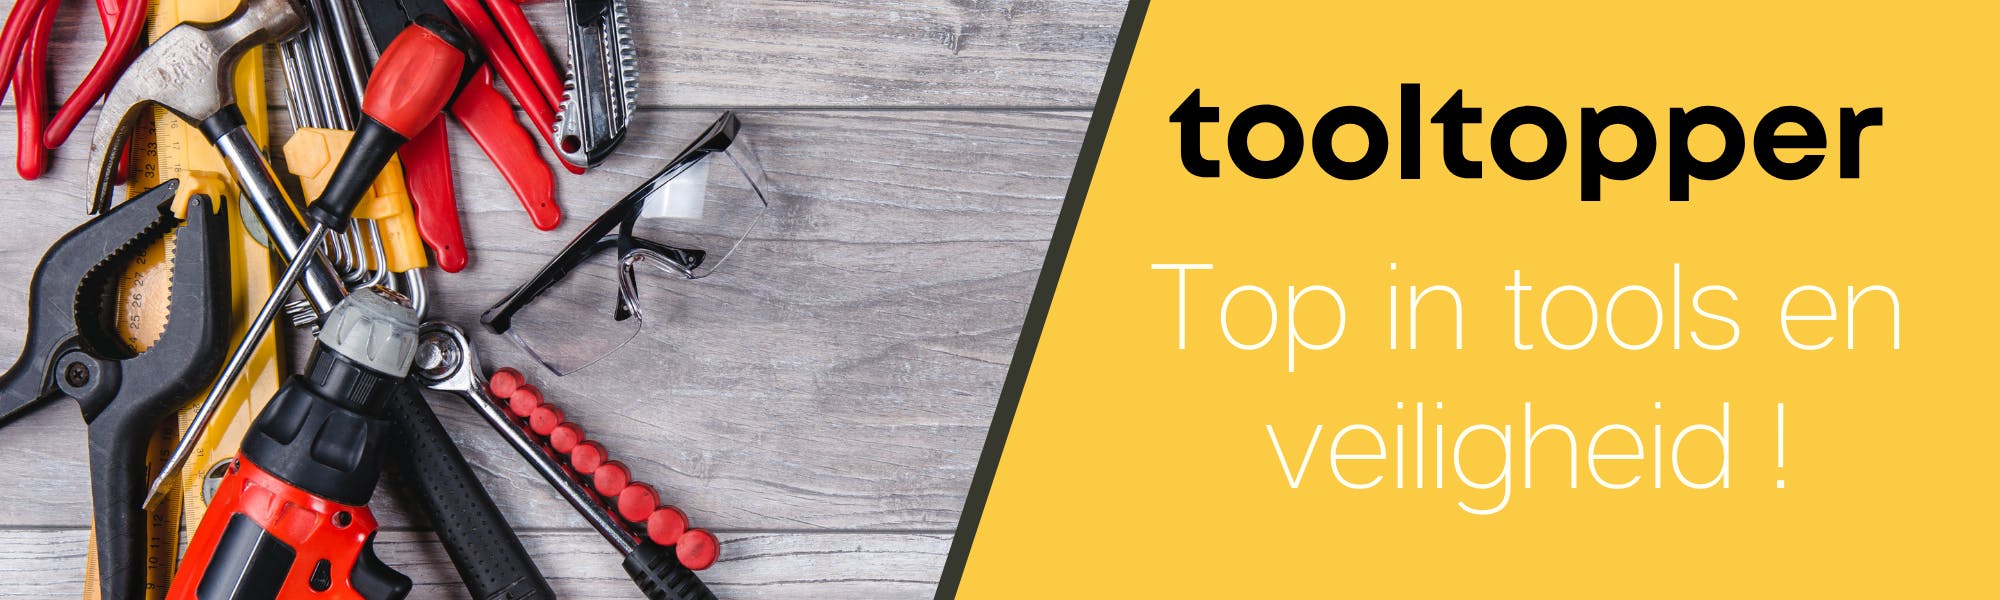 tooltopper, Top in tools en veiligheid